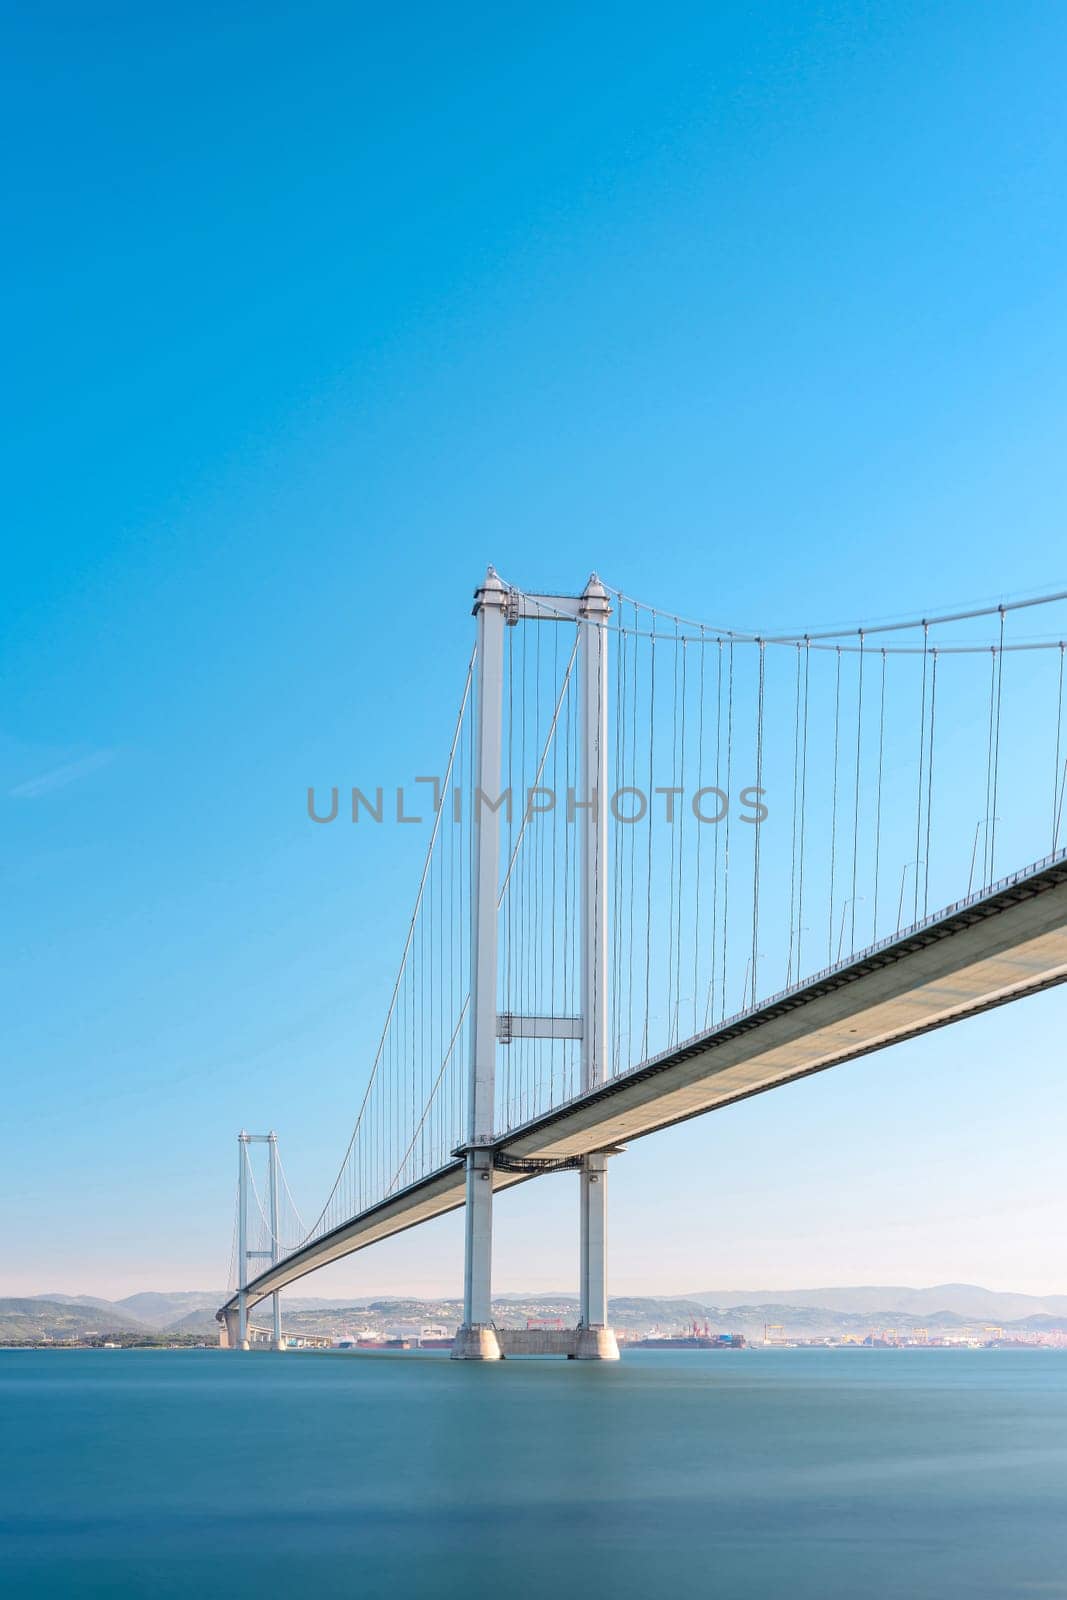 Osmangazi Bridge (Izmit Bay Bridge) located in Izmit, Kocaeli, Turkey. Suspension bridge captured with long exposure technique by Sonat